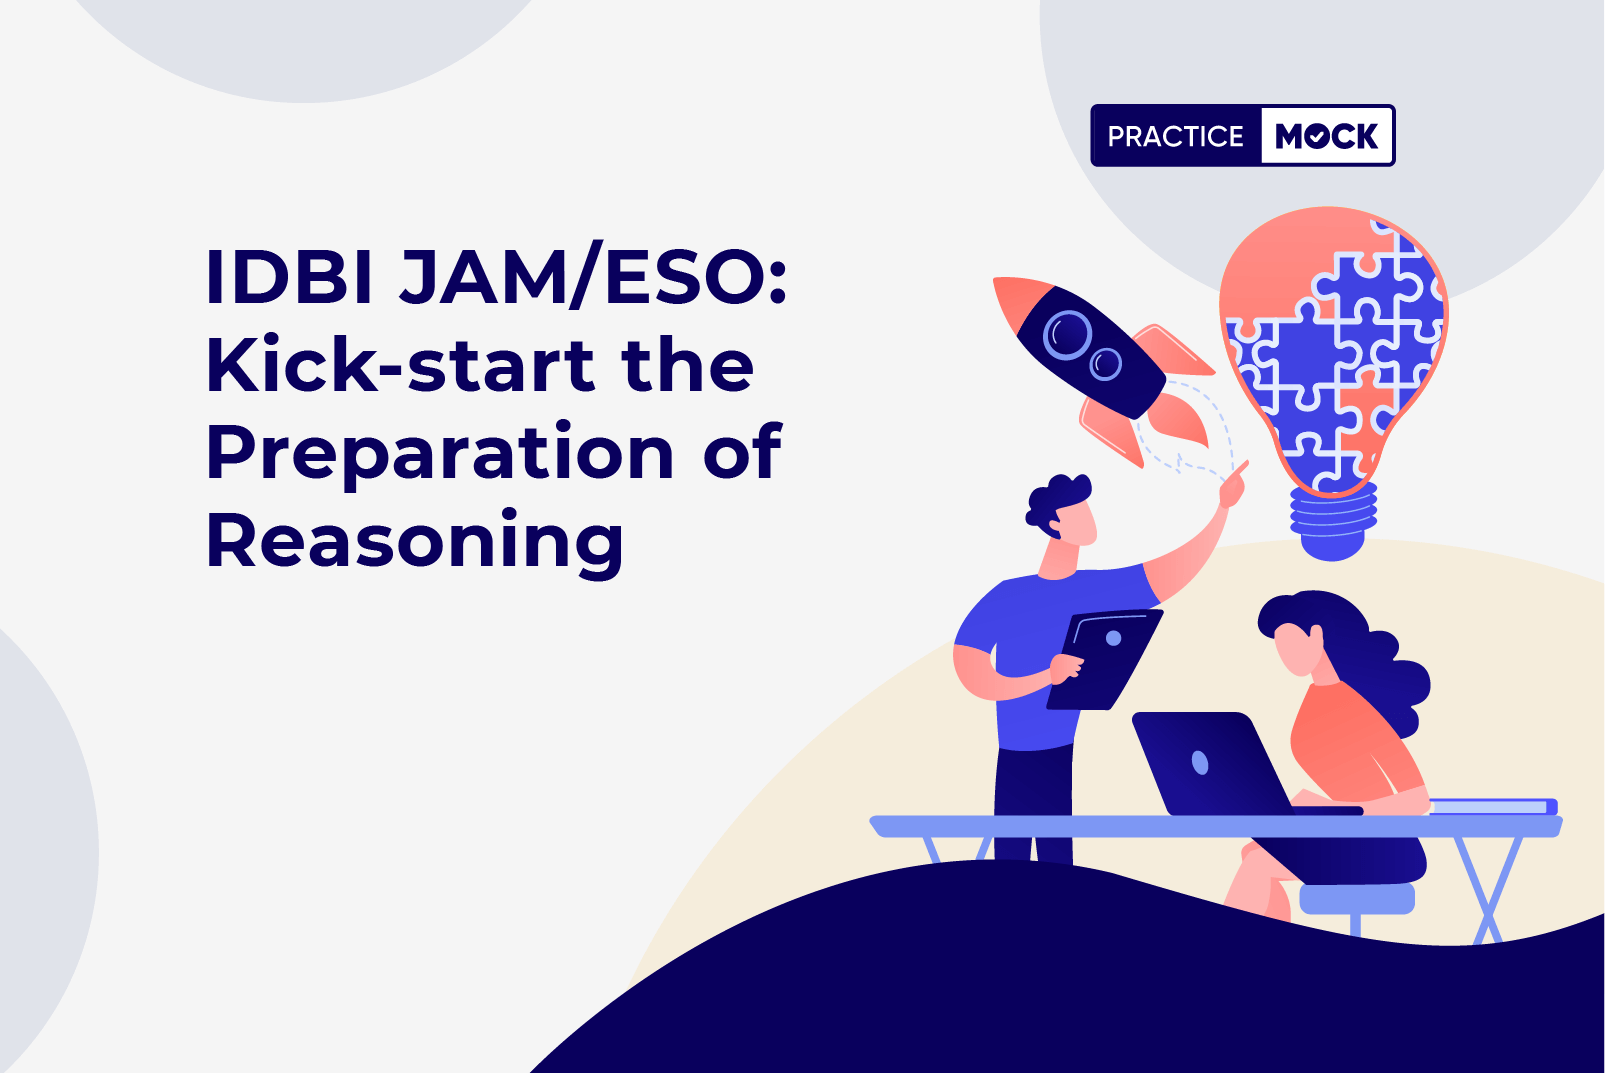 IDBI JAM ESO- Kick-start the Preparation of Reasoning